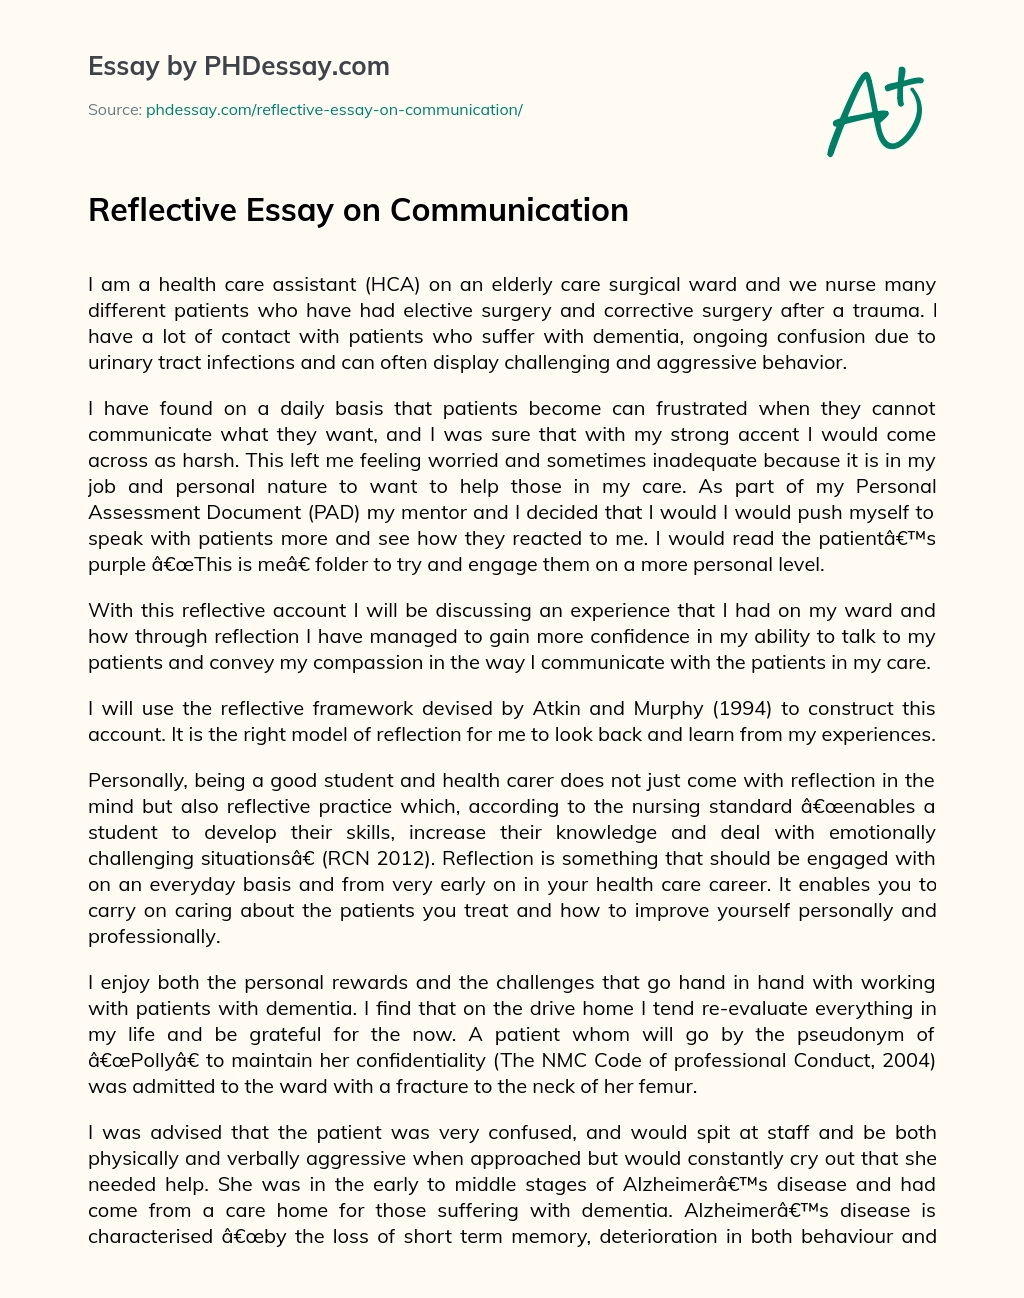 Reflective Essay on Communication